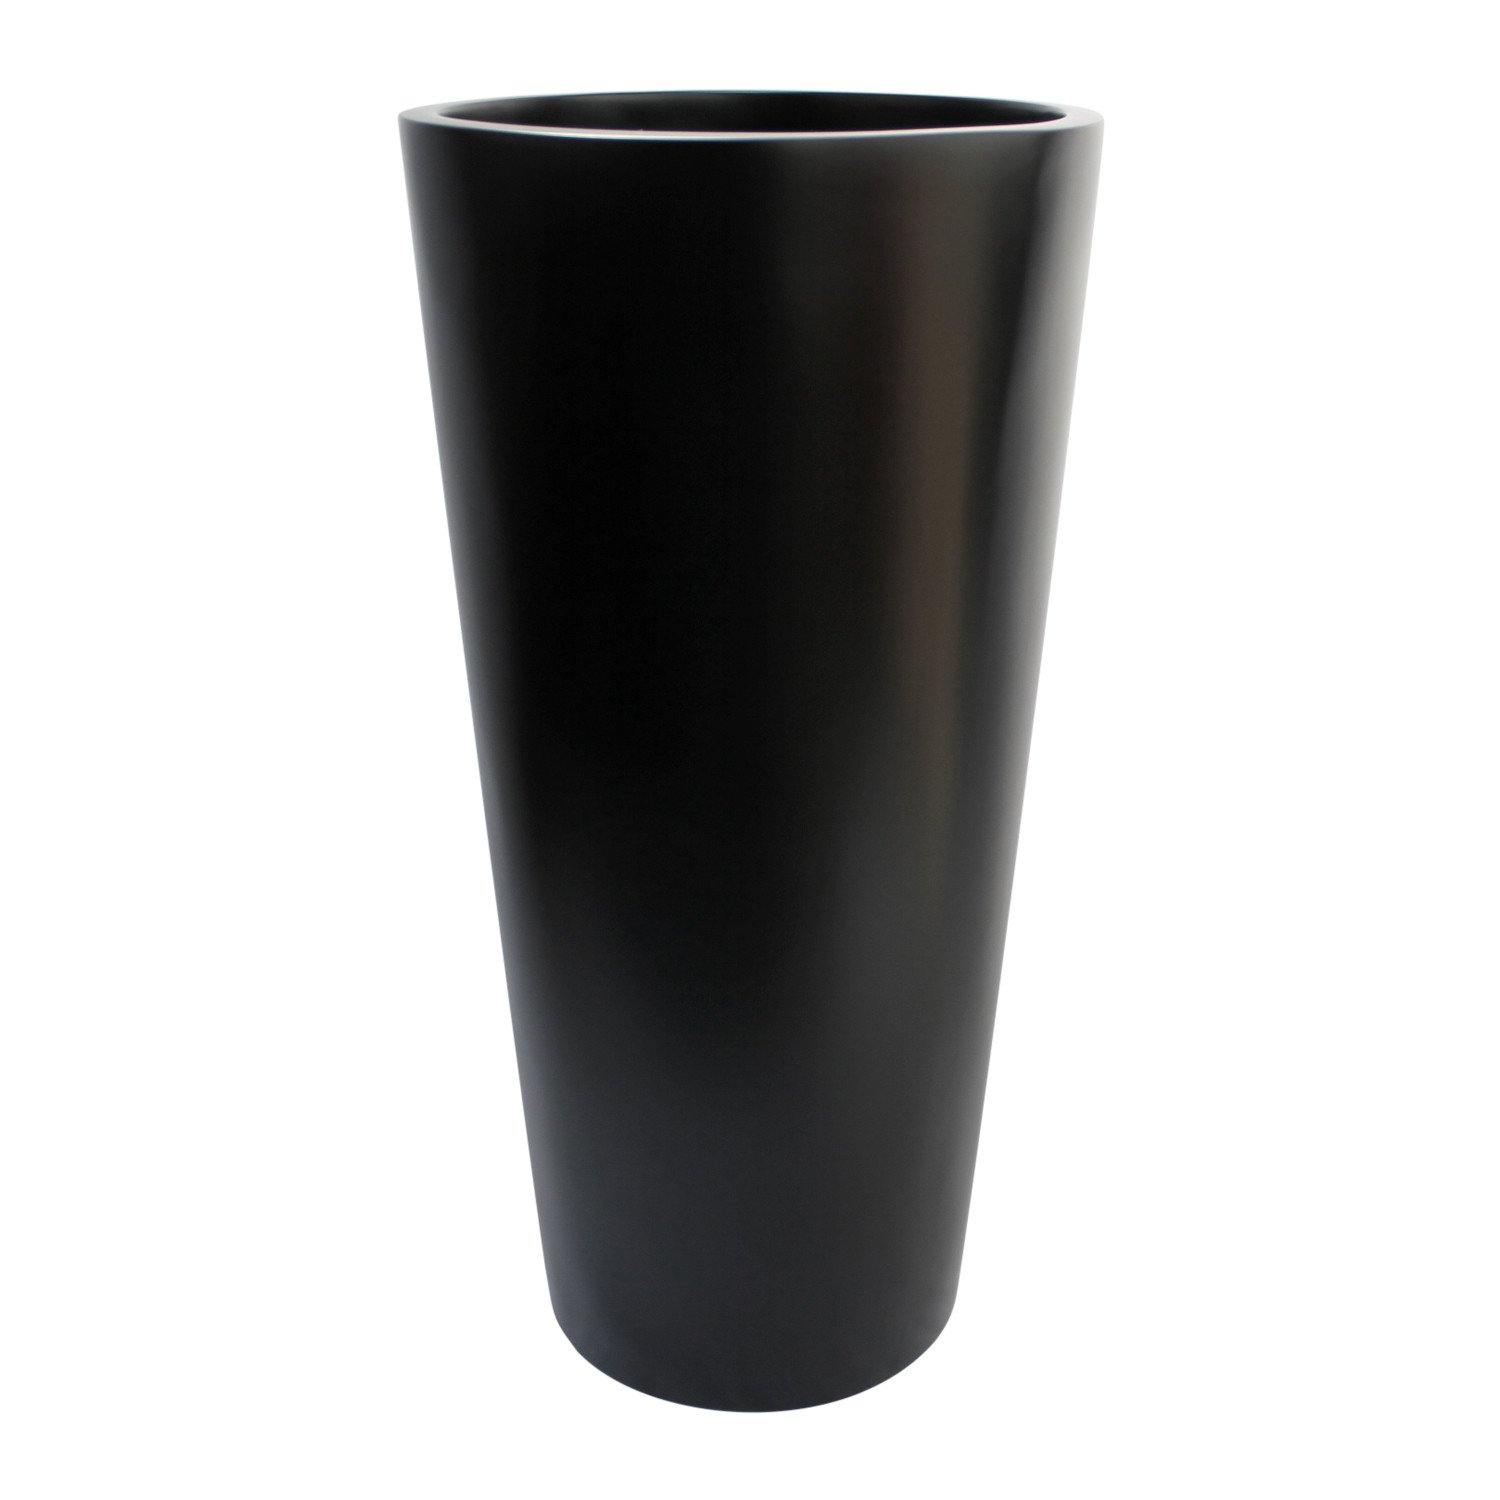 Napa Round Cylinder Fiberglass Planter, Brown, 15.5 Inch